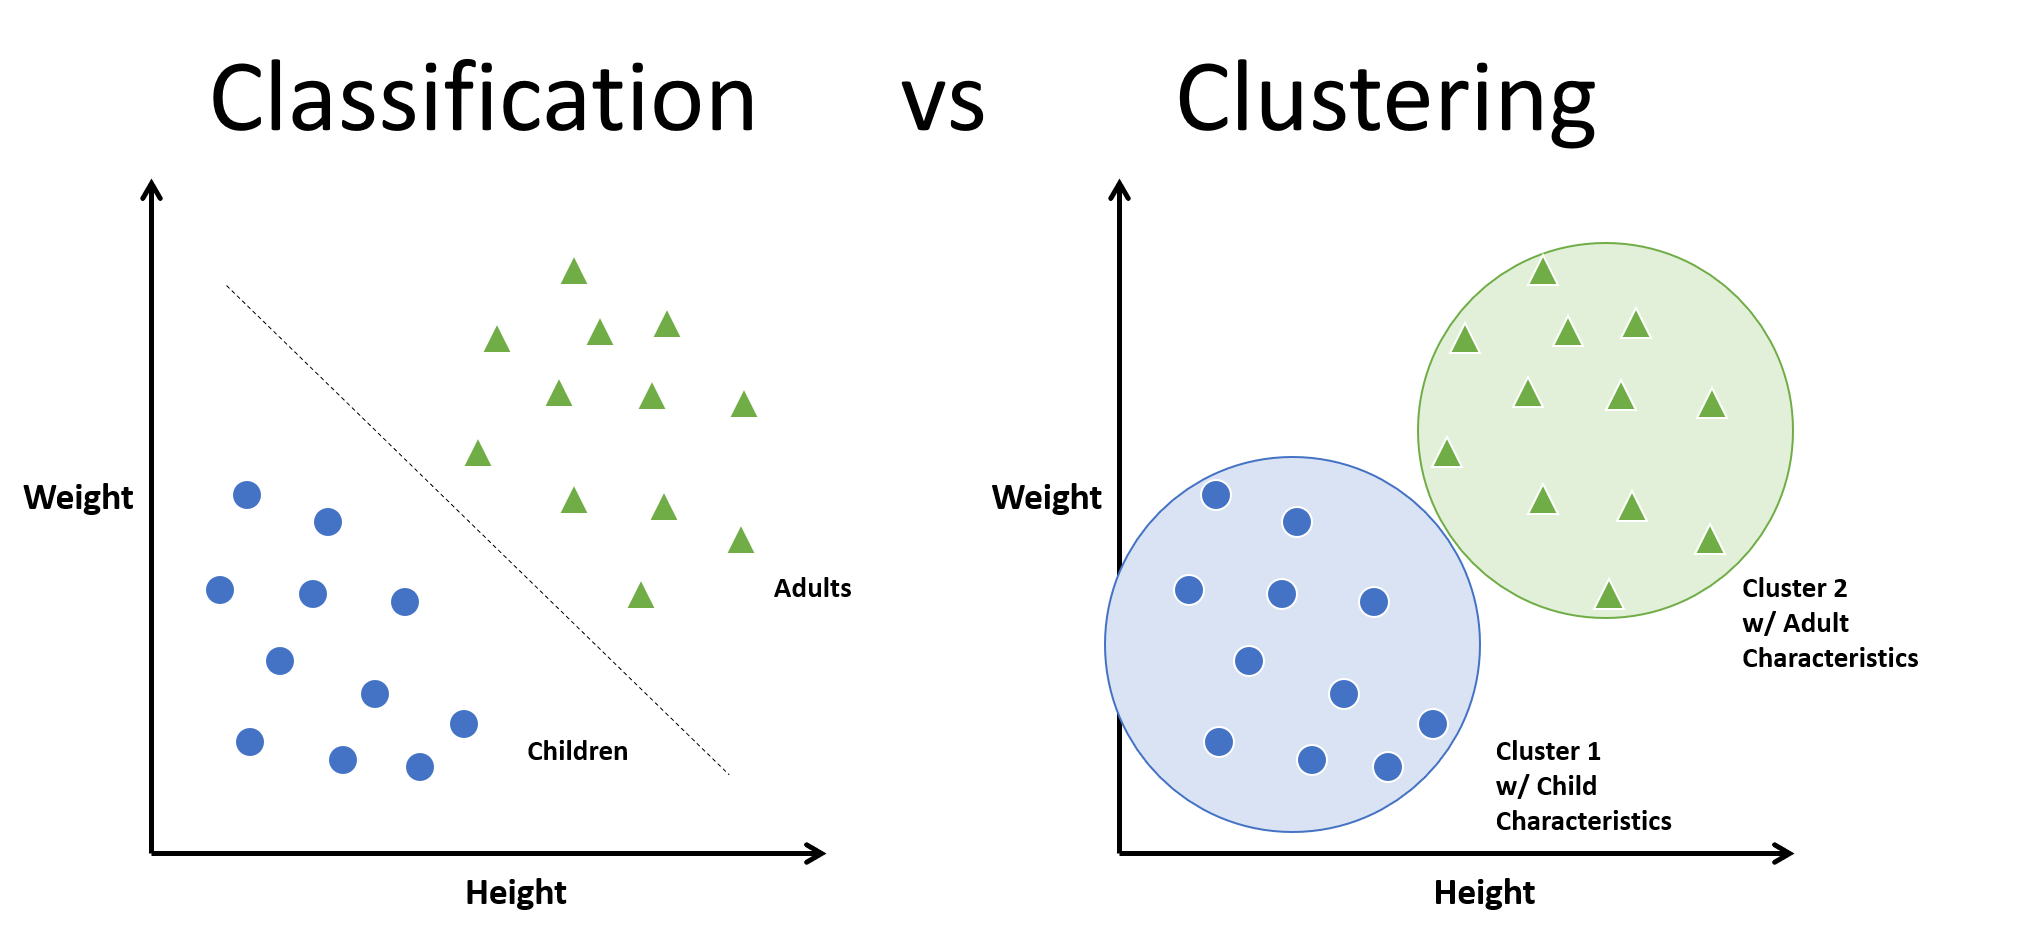 Classification vs clustering